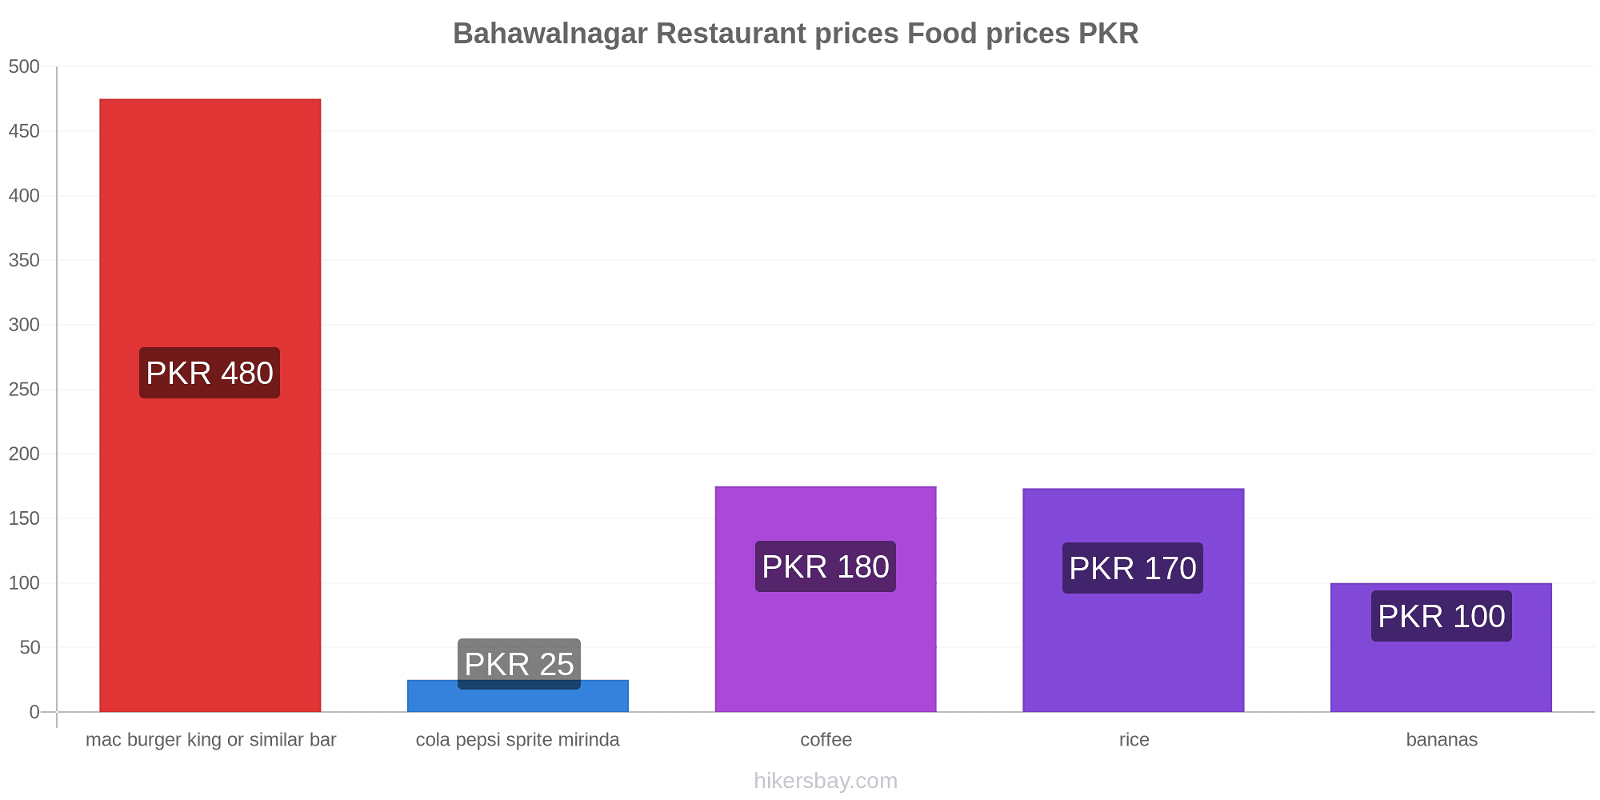 Bahawalnagar price changes hikersbay.com